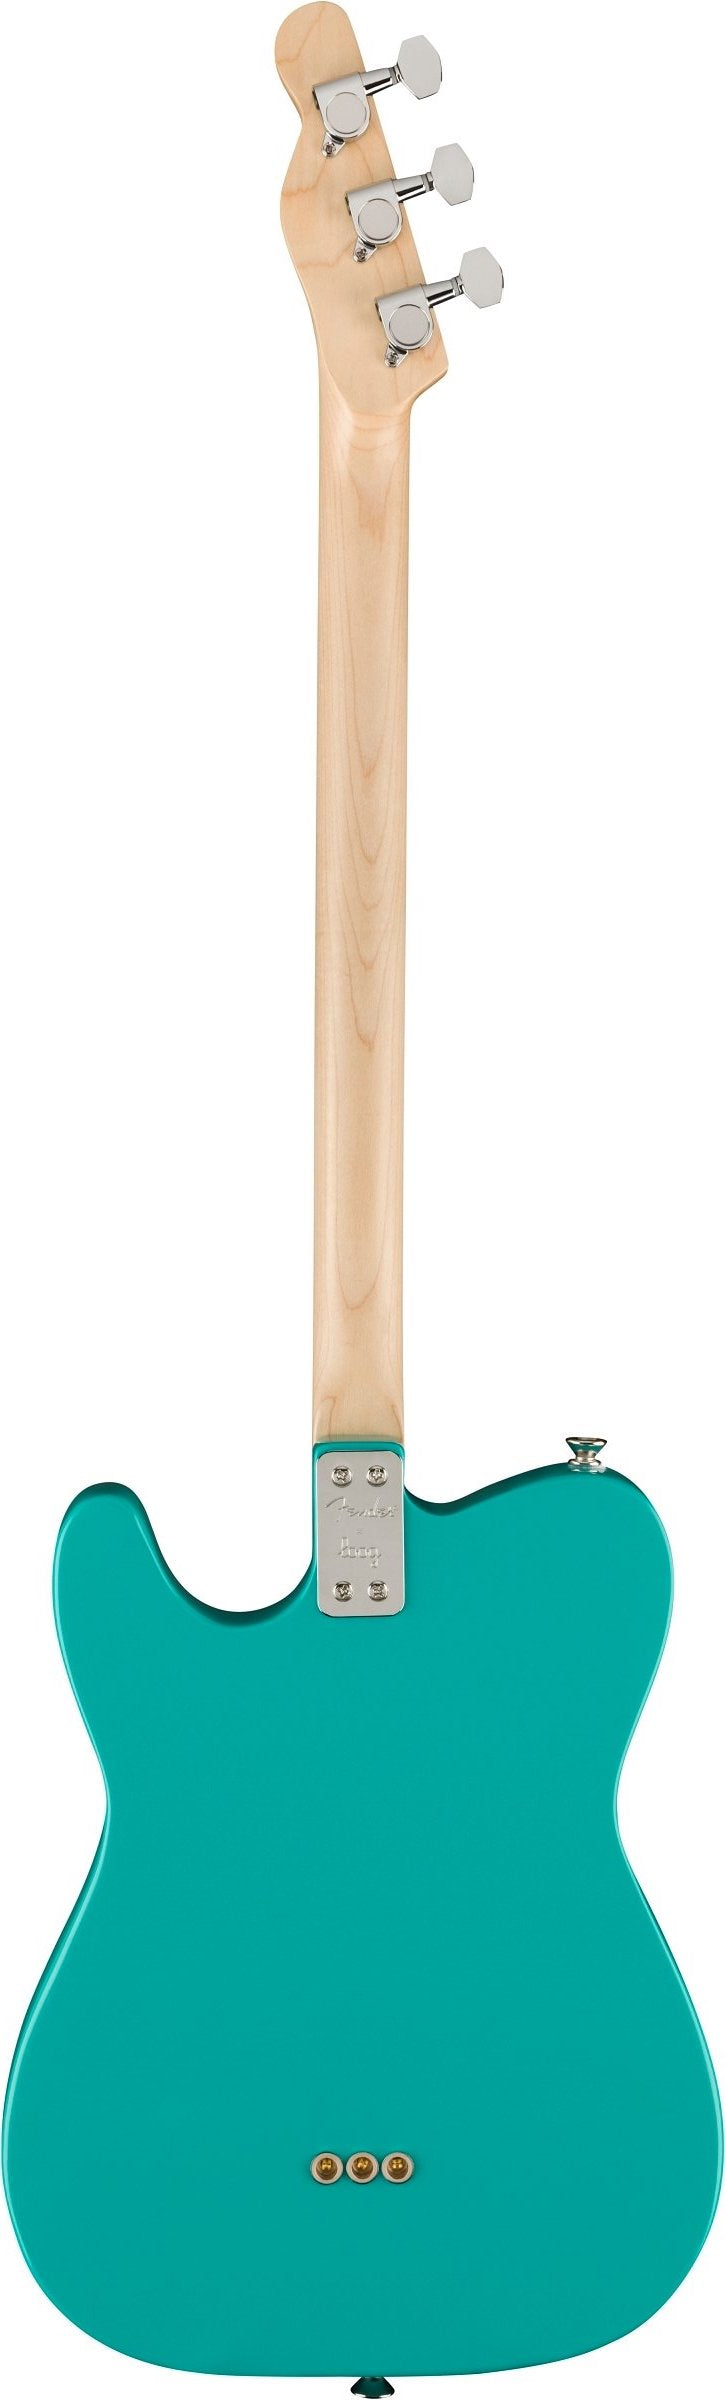 Fender x Loog Telecaster 3-String Electric Guitar, Green